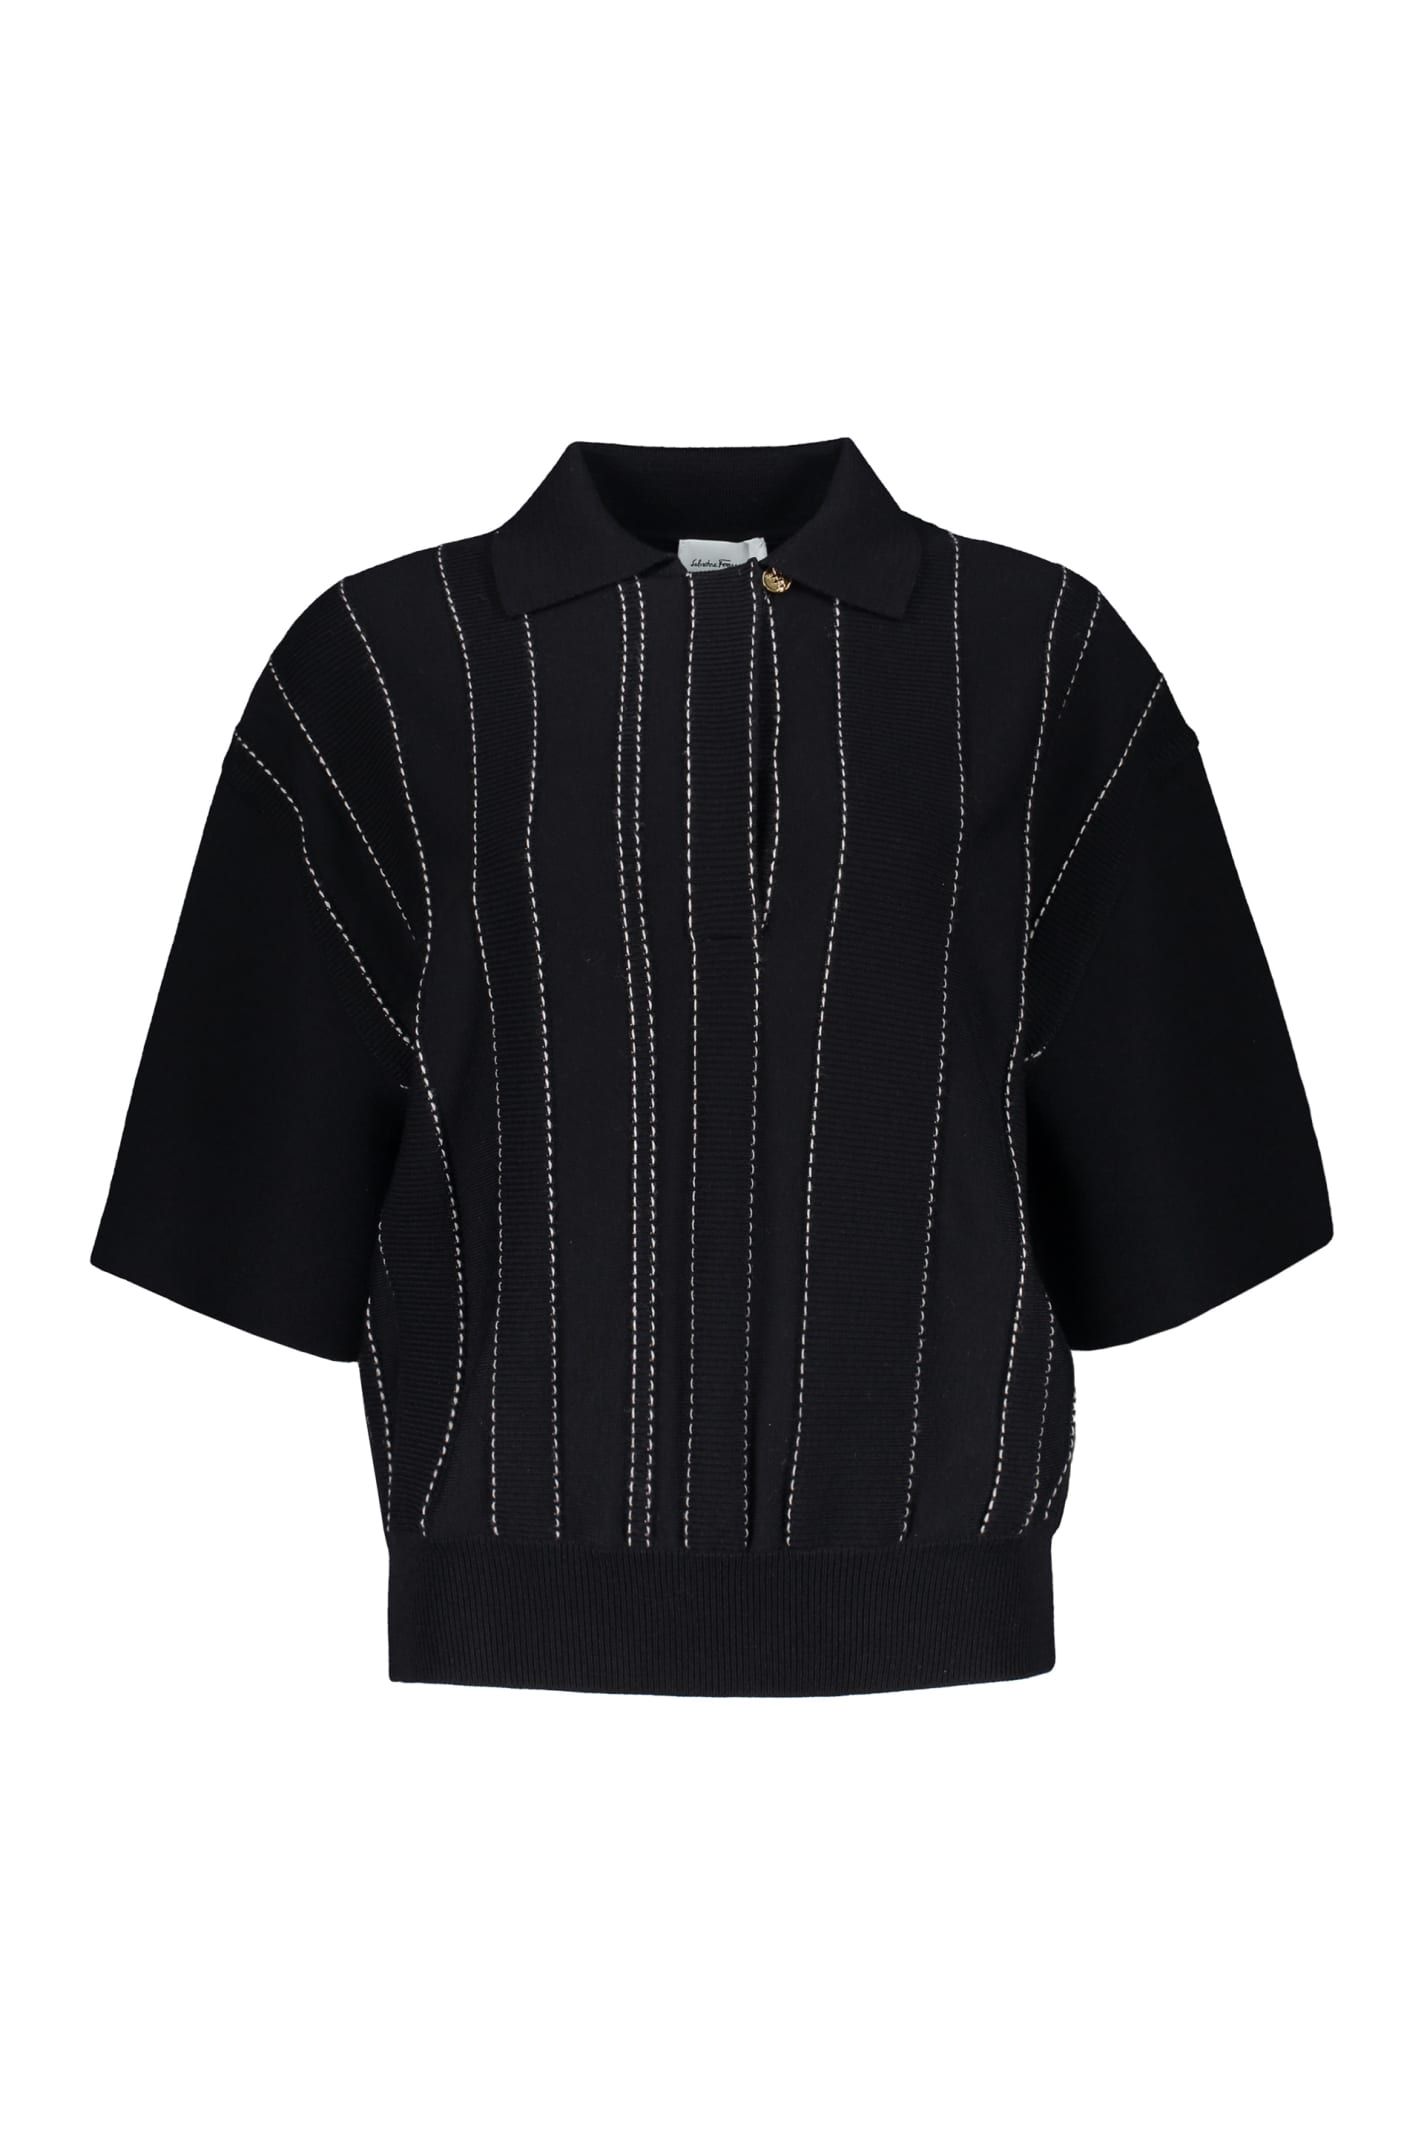 Ferragamo Knitted Wool Polo Shirt In Black